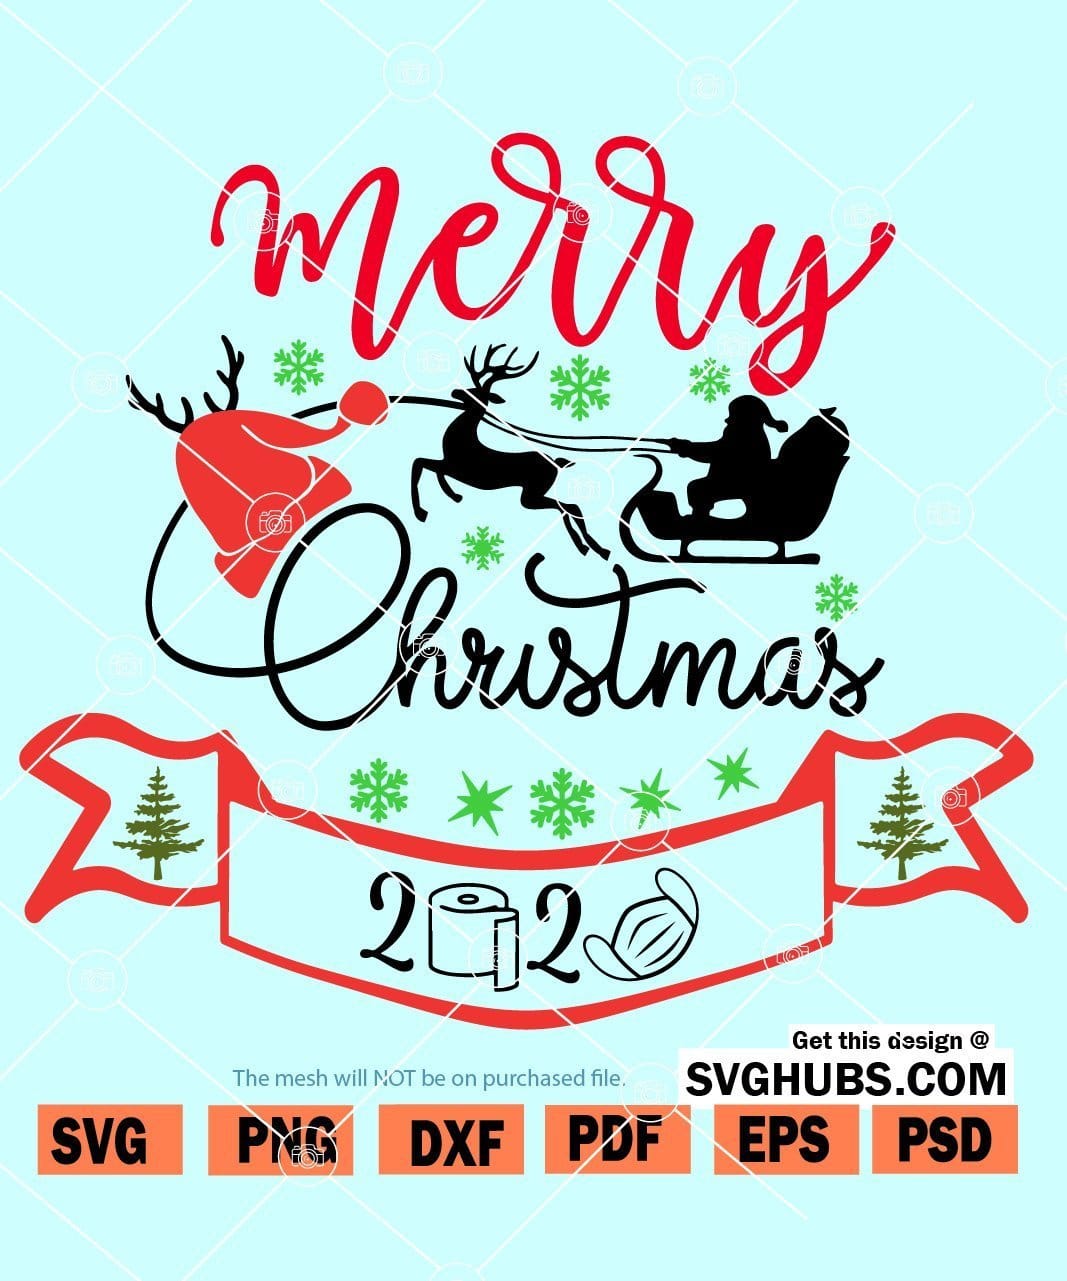 Merry Christmas 2020 SVG